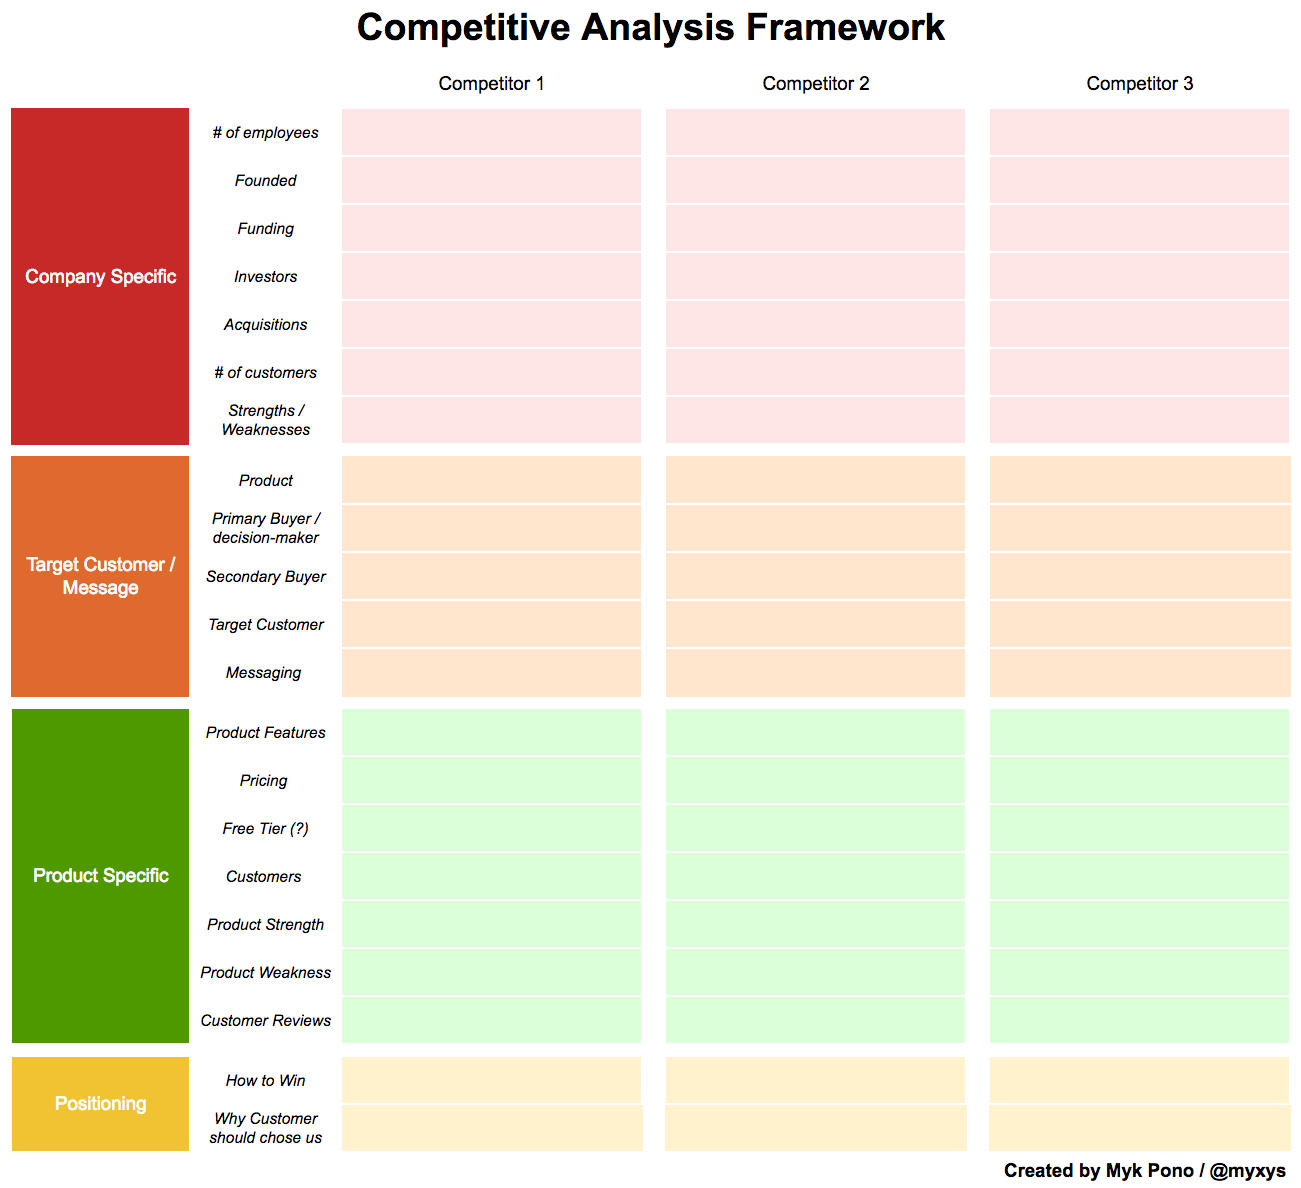 flowvella competitive analysis